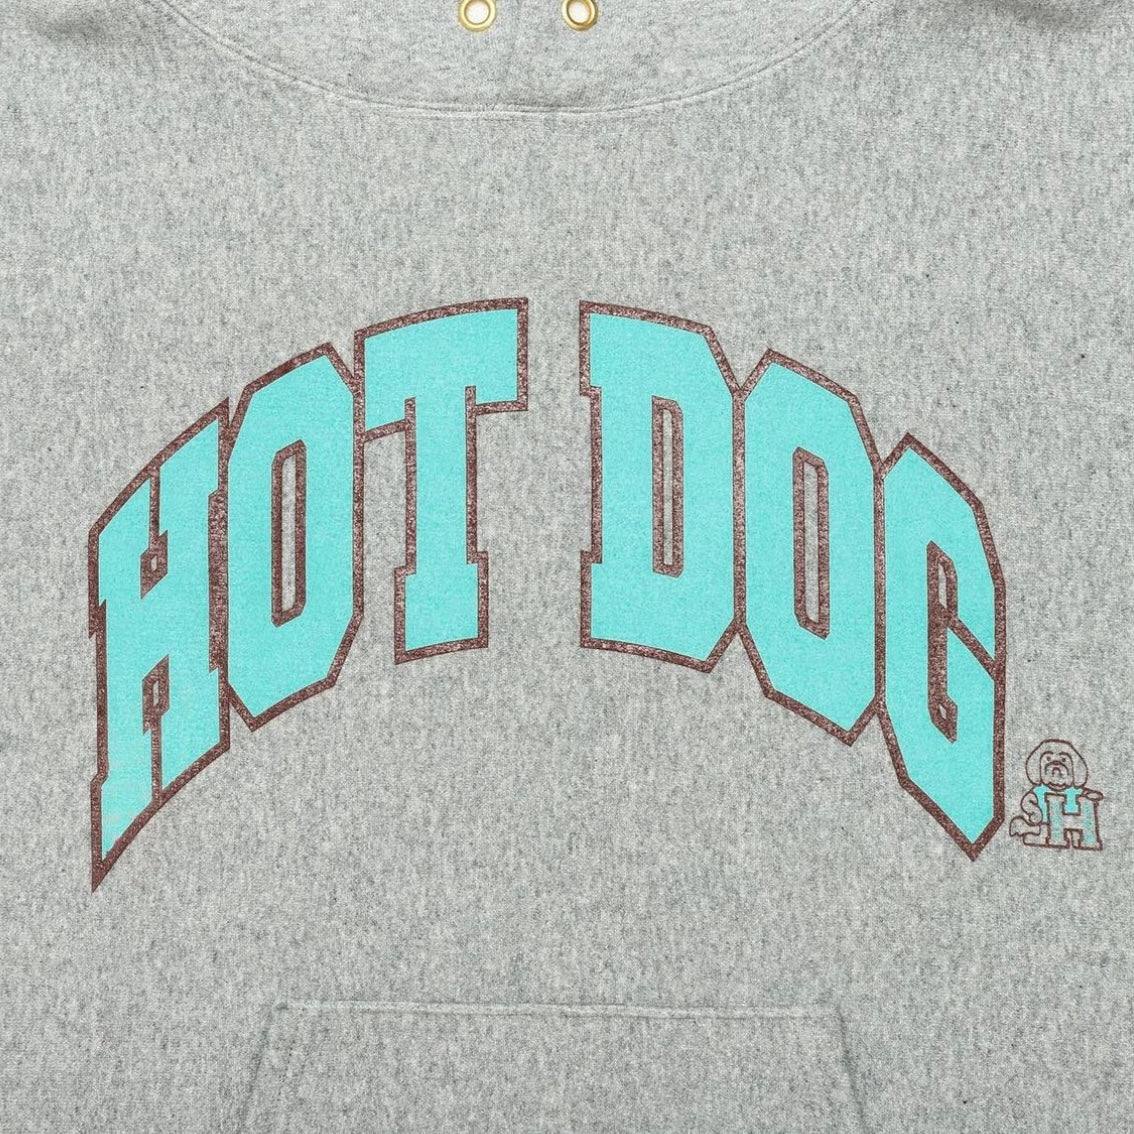 "HOT DOG COLLEGE LOGO HOODIE / designed by Shuntaro Watanabe"